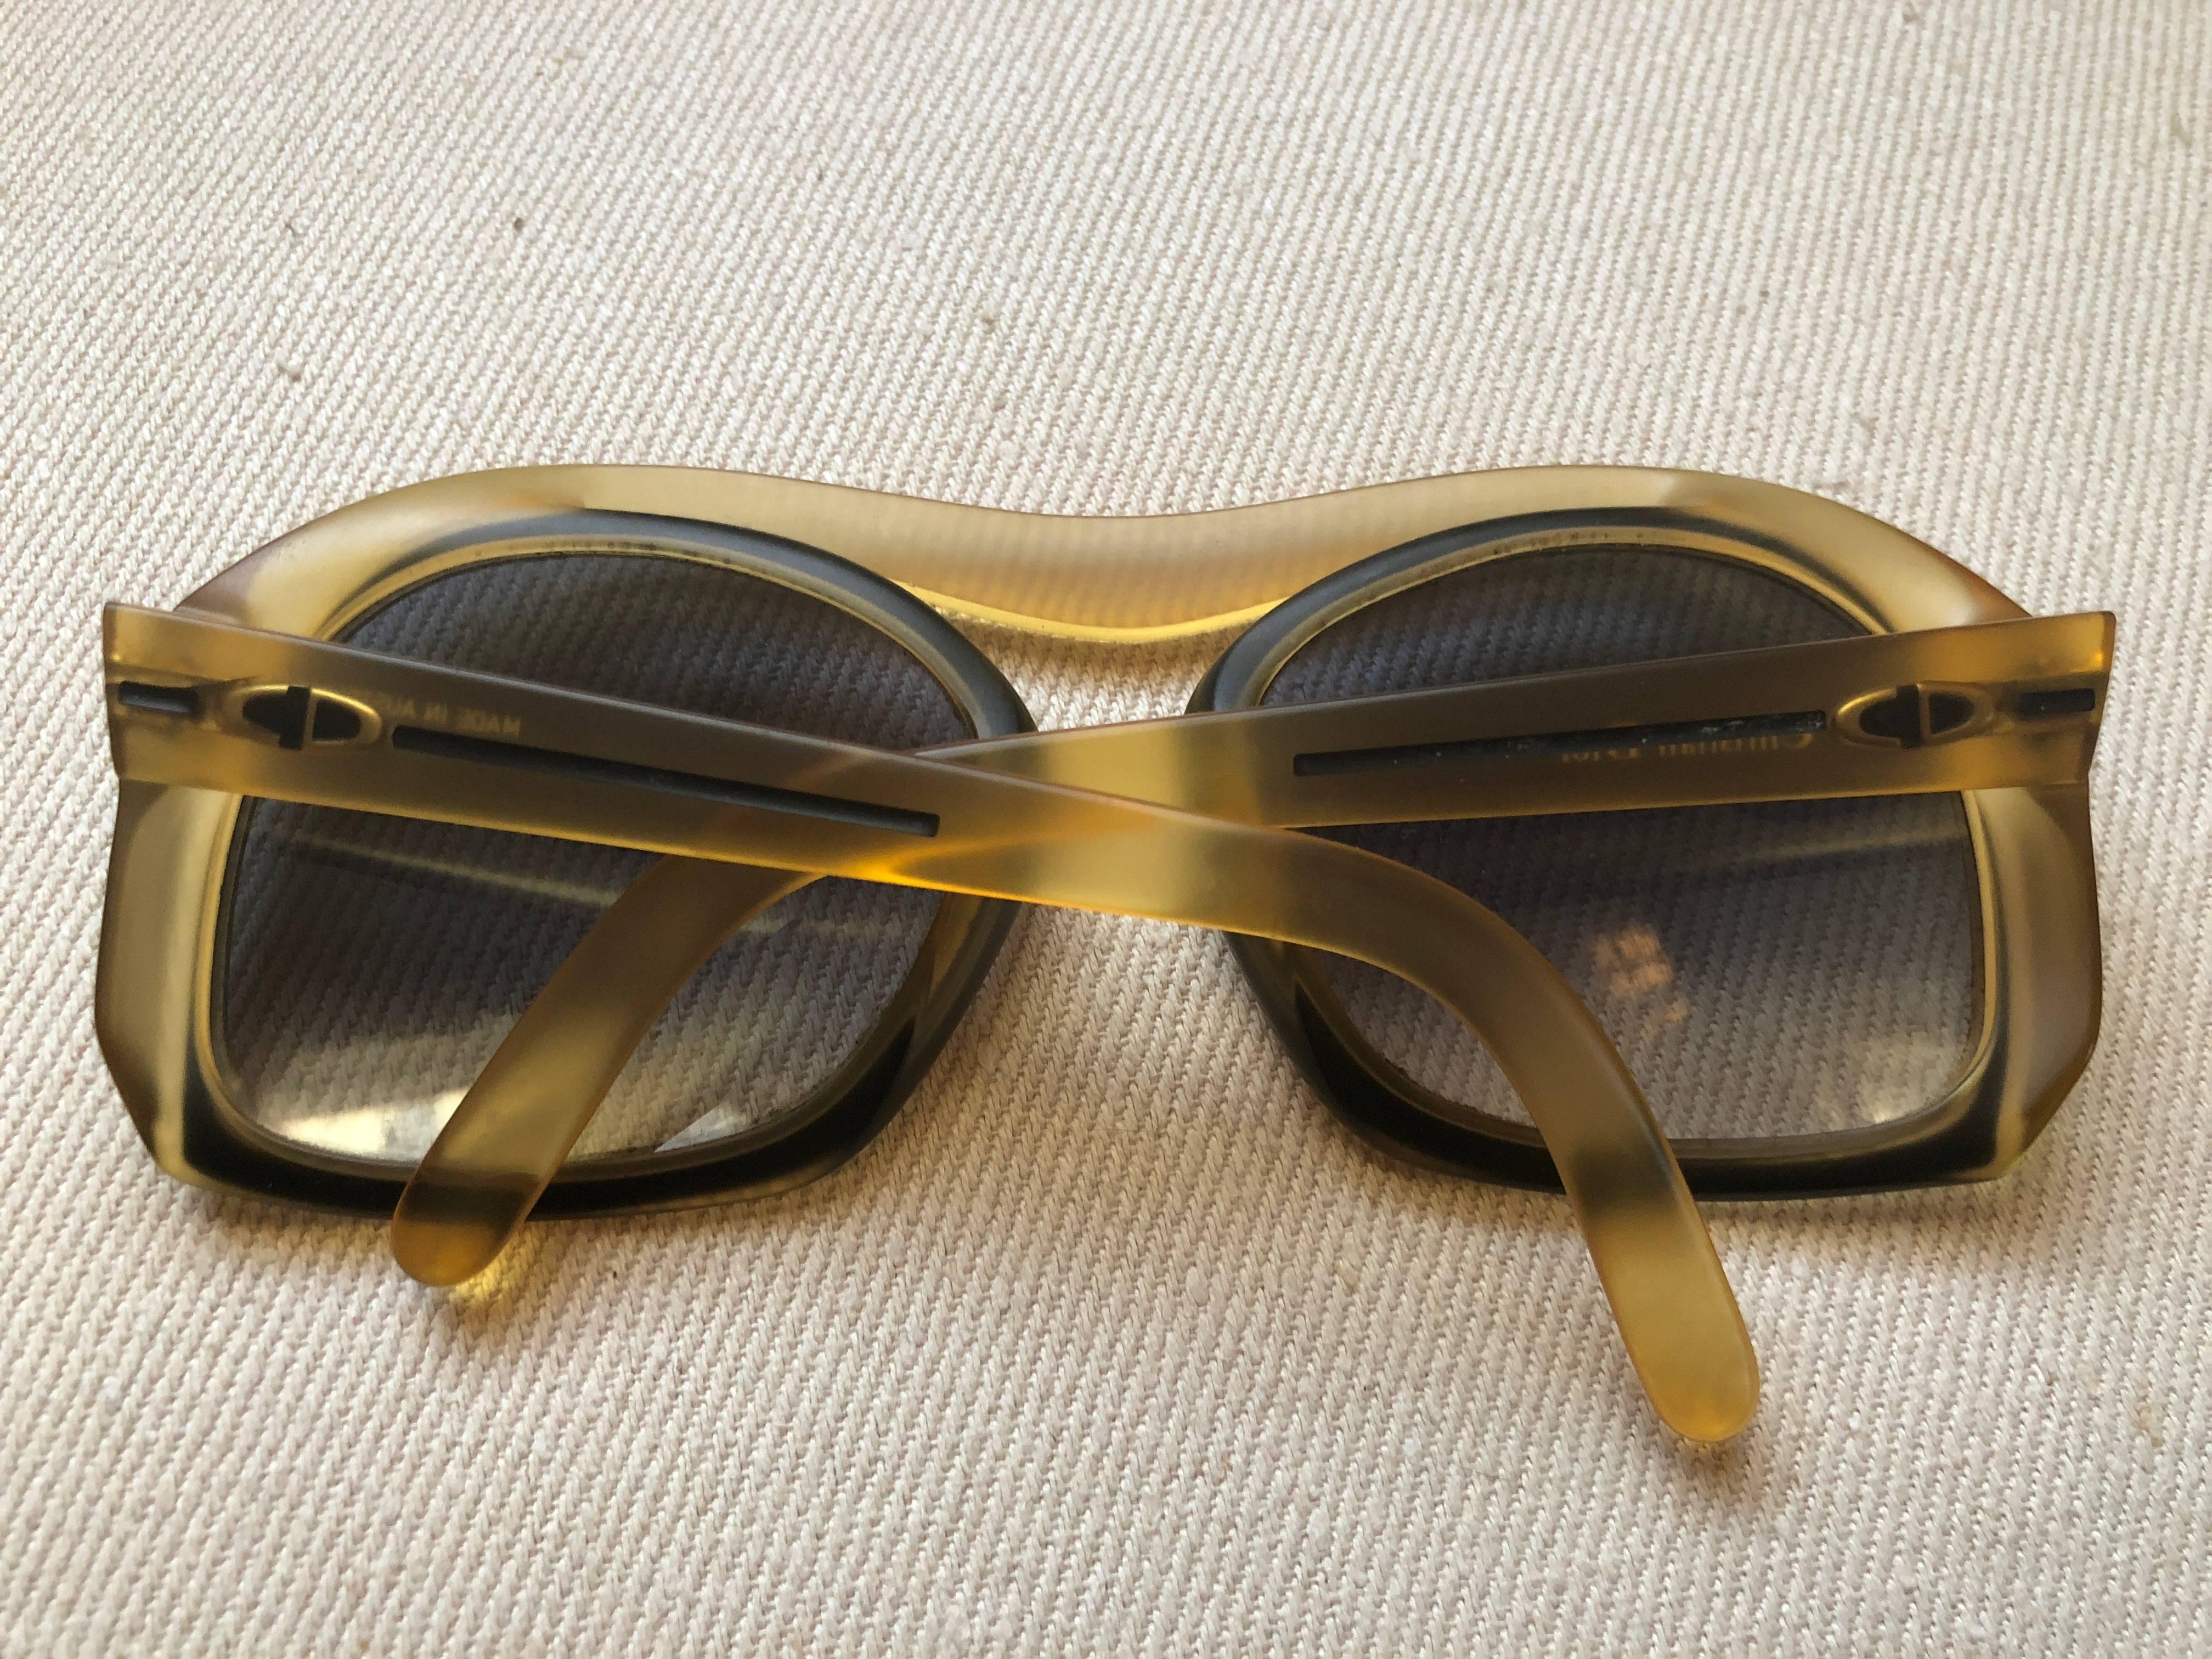 Christian Dior Futuristic 70's Vintage Oversize Sunglasses Style #2043-70
Excellent condition